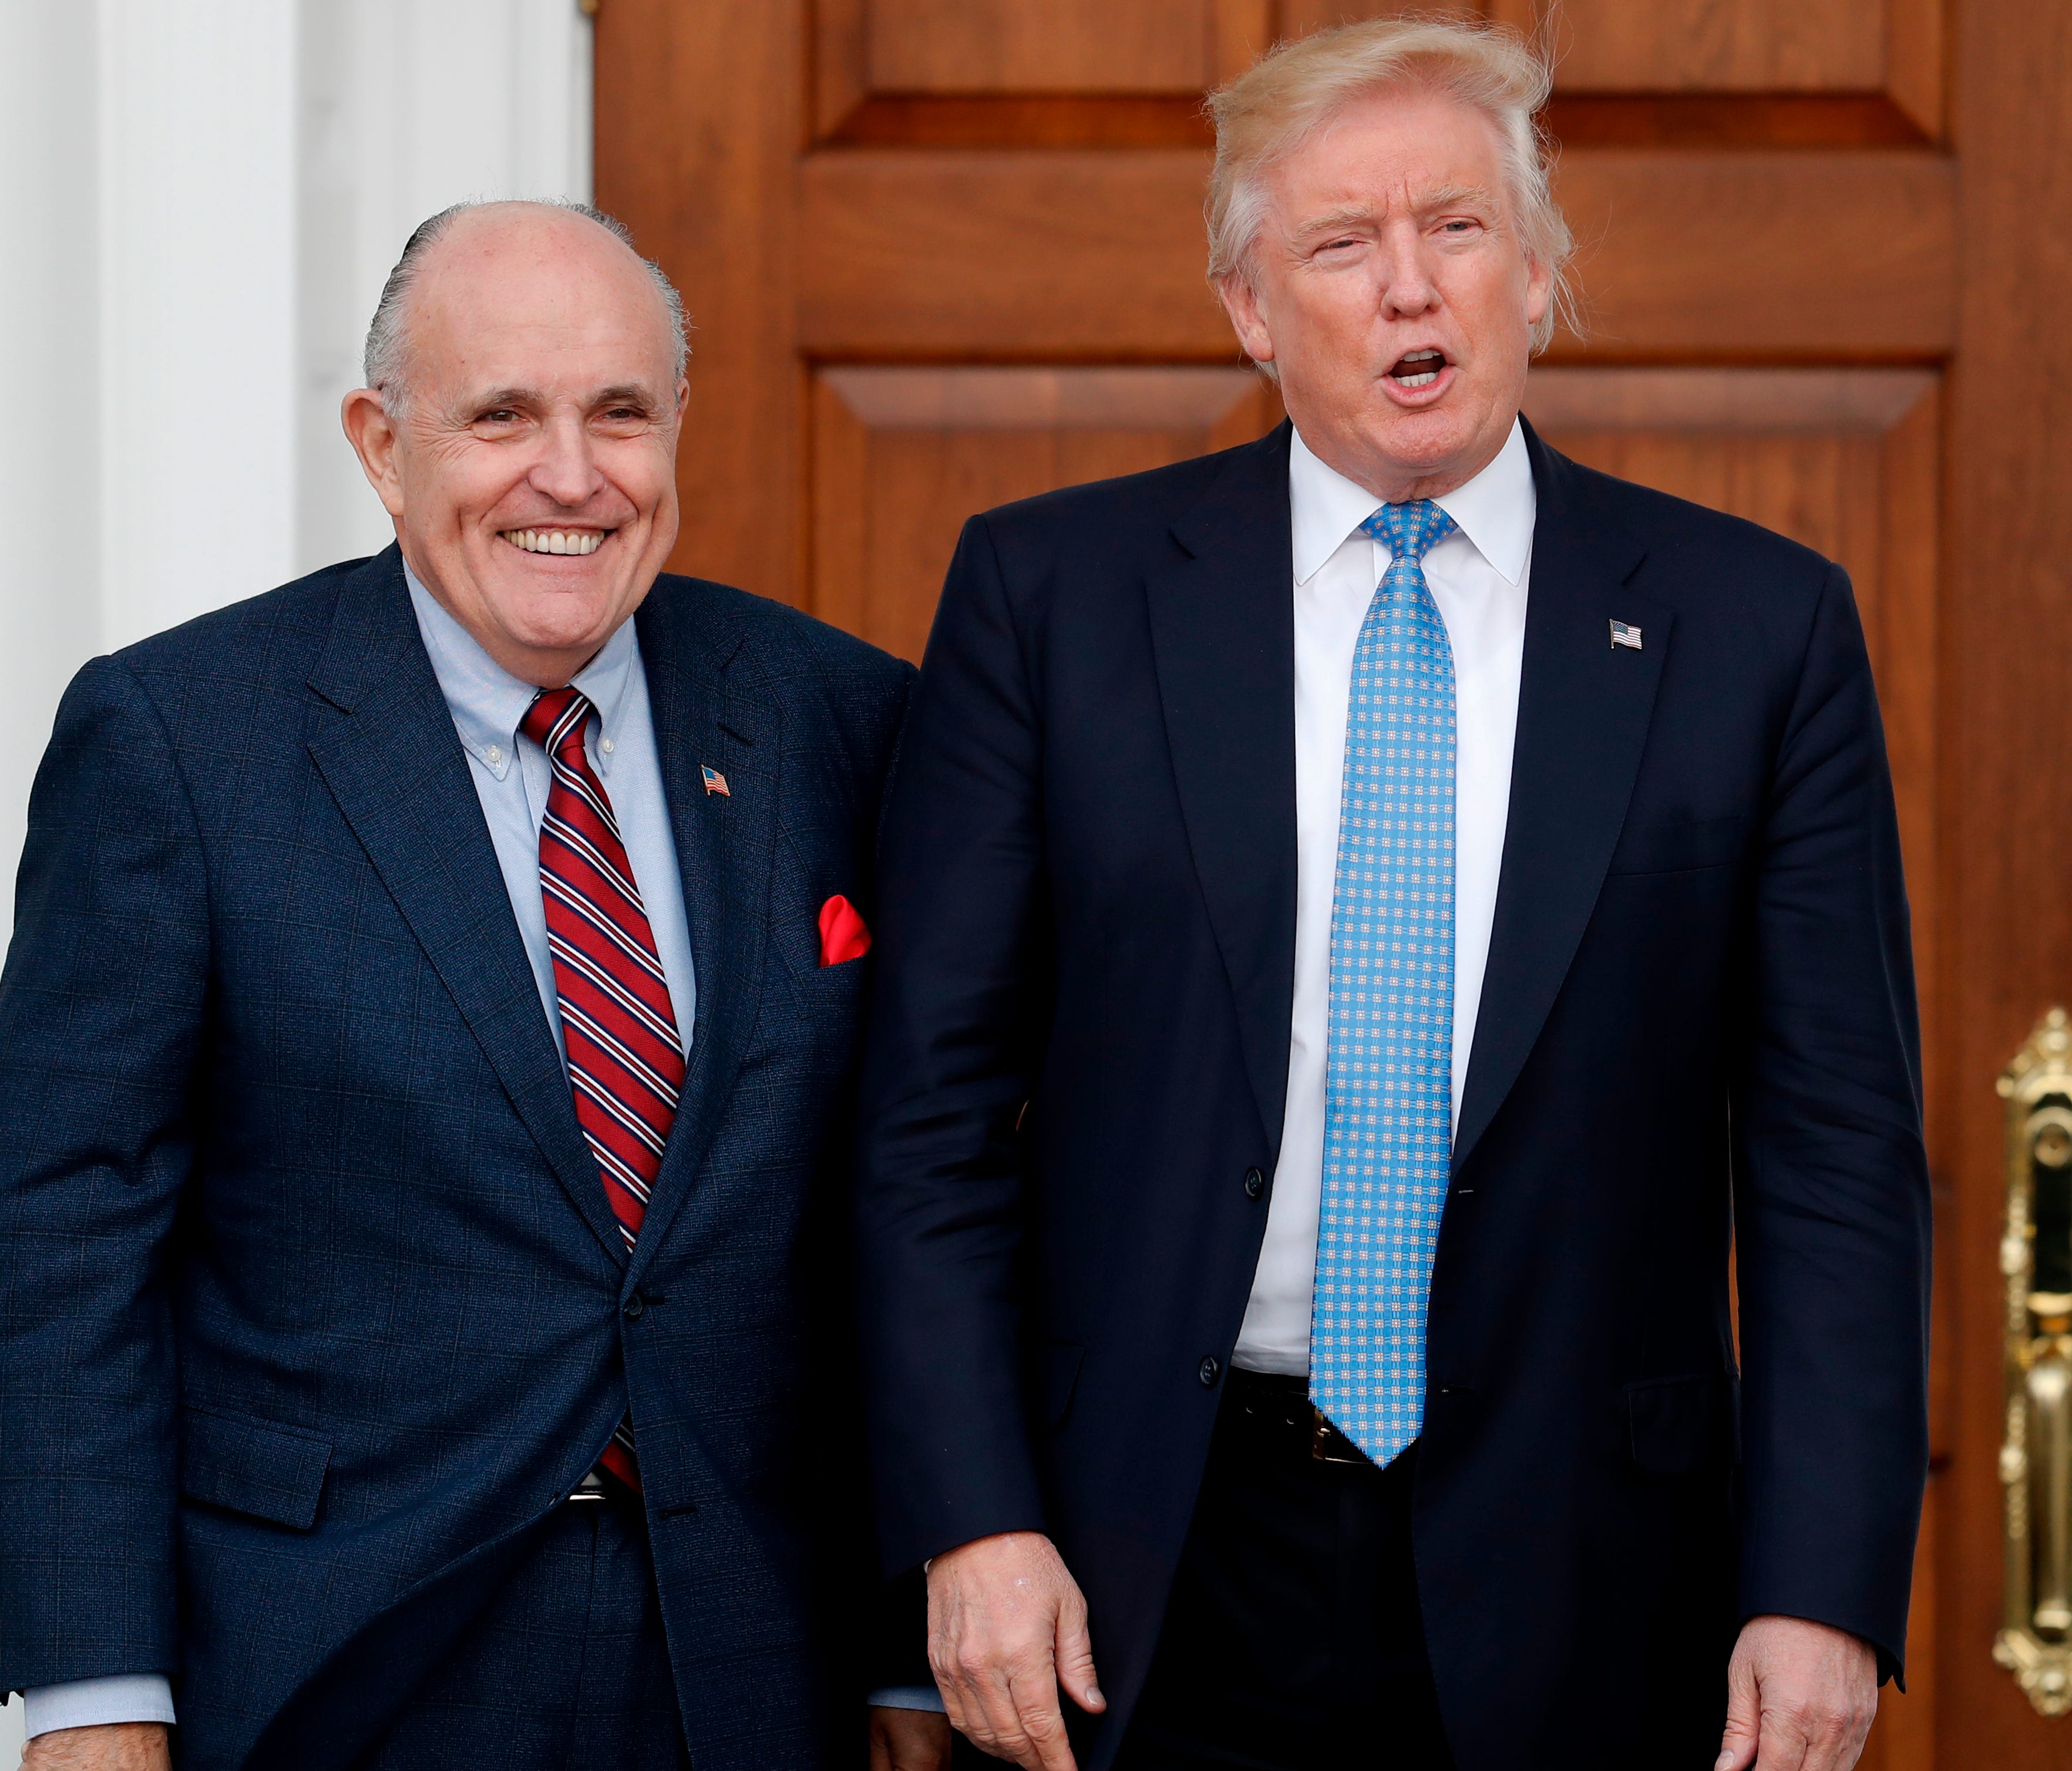 President Trump and Rudy Giuliani in 2016 photo.